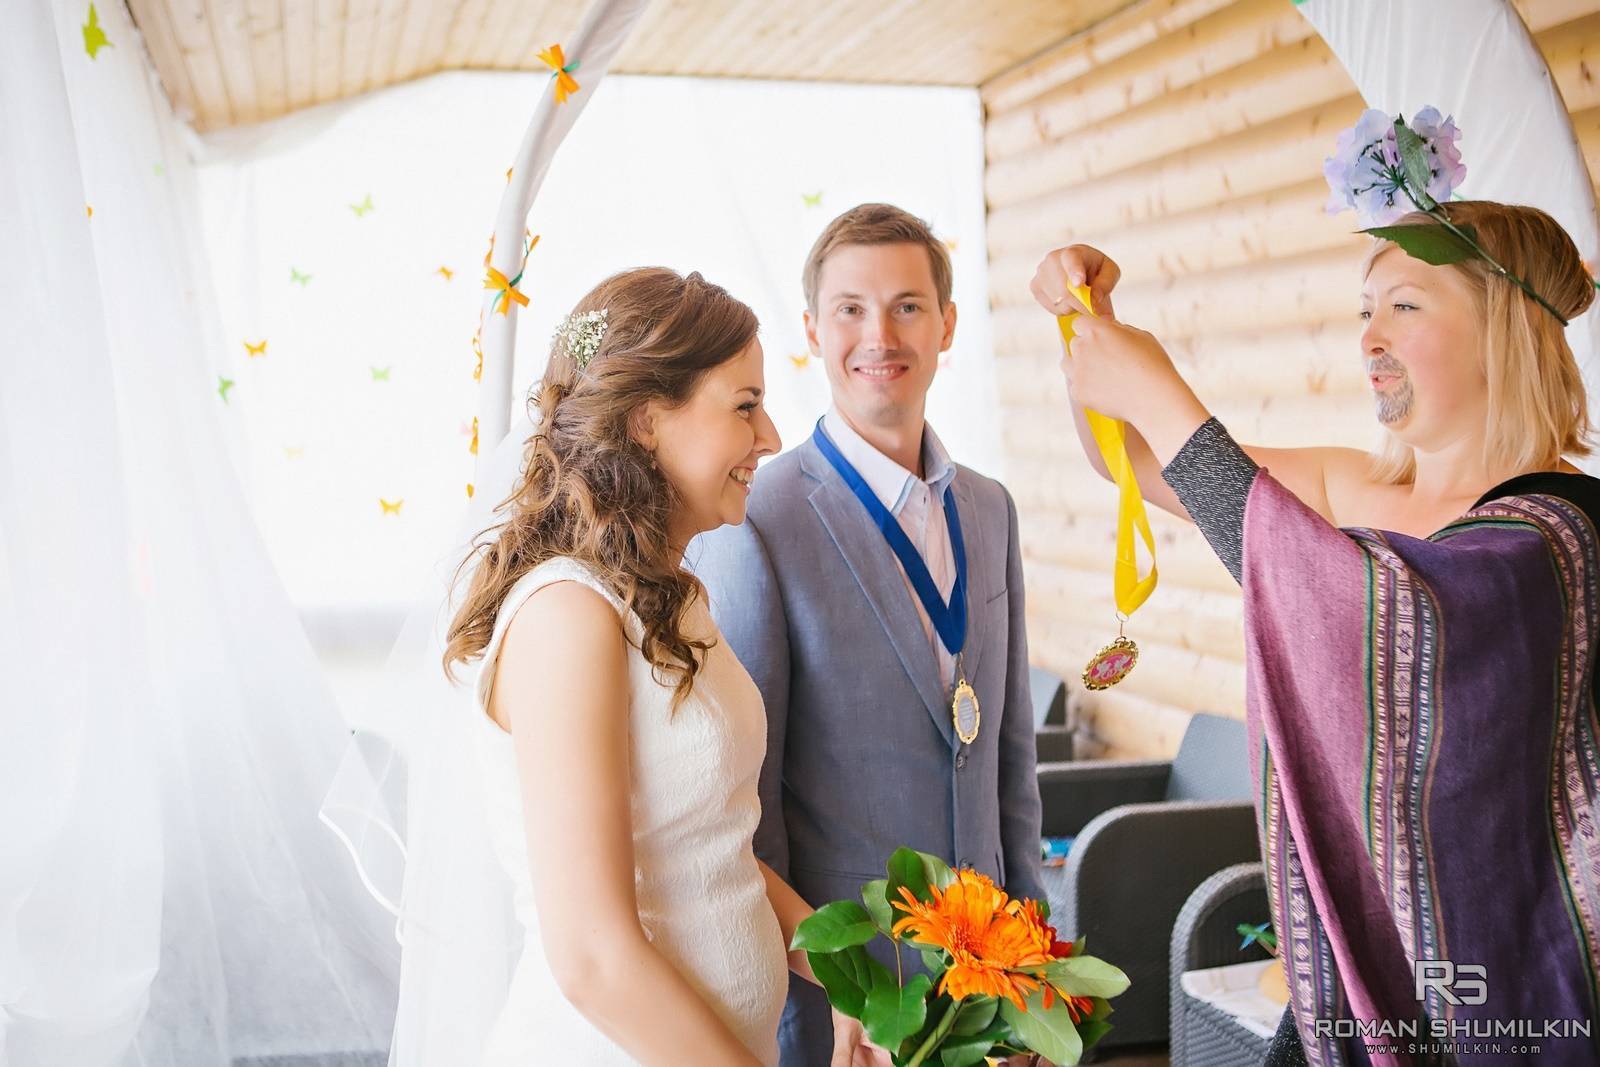 Как провести свадьбу весело при ограниченном бюджете